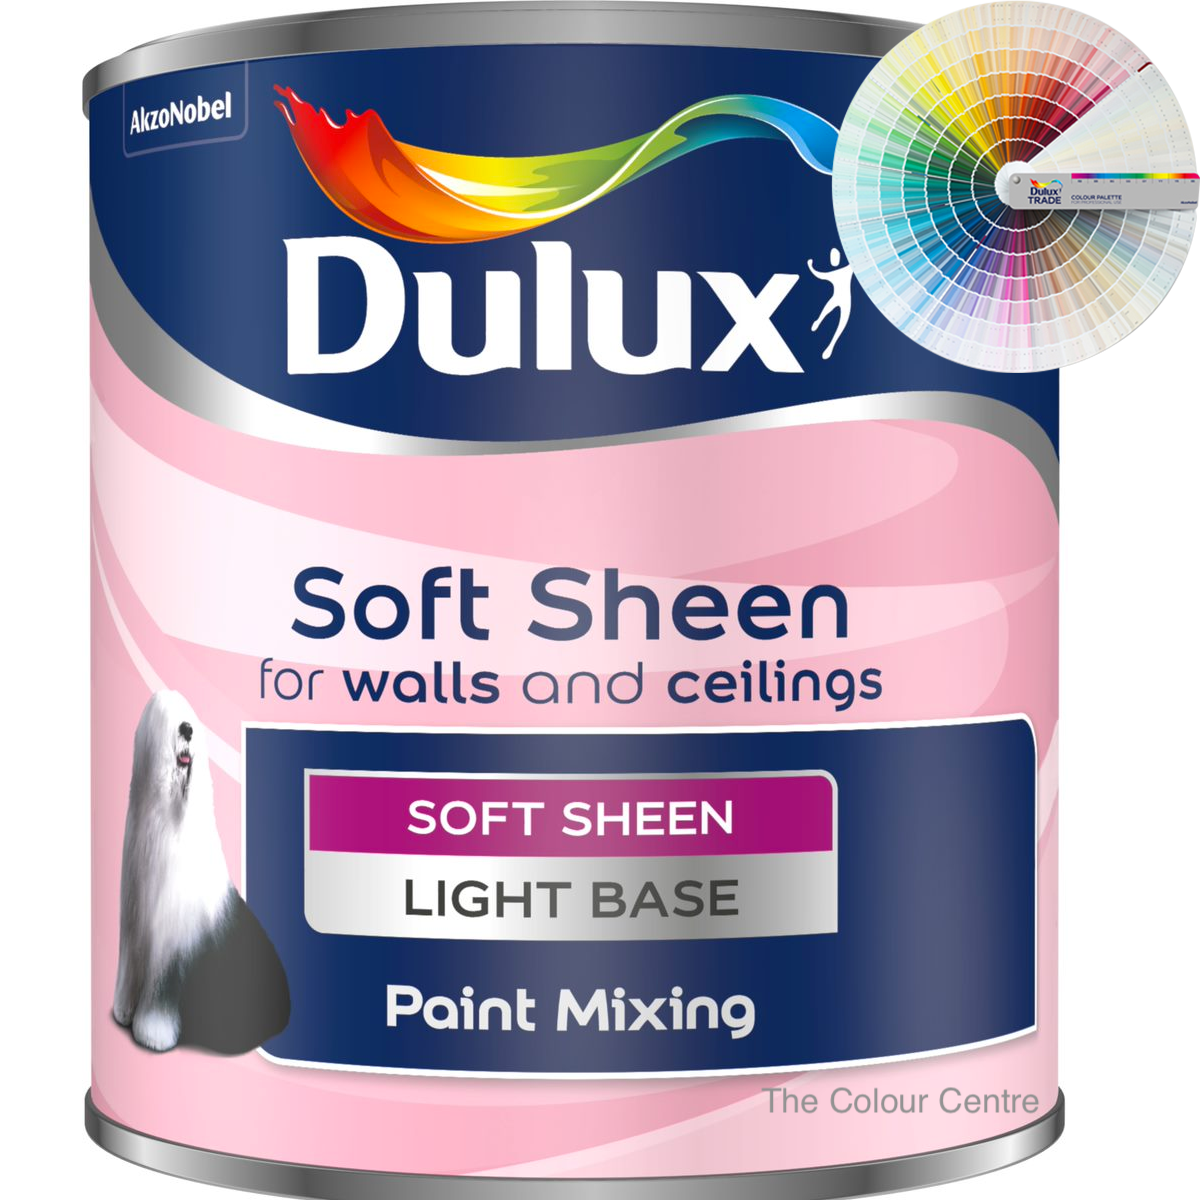 Dulux Retail Vinyl Soft Sheen Tinted